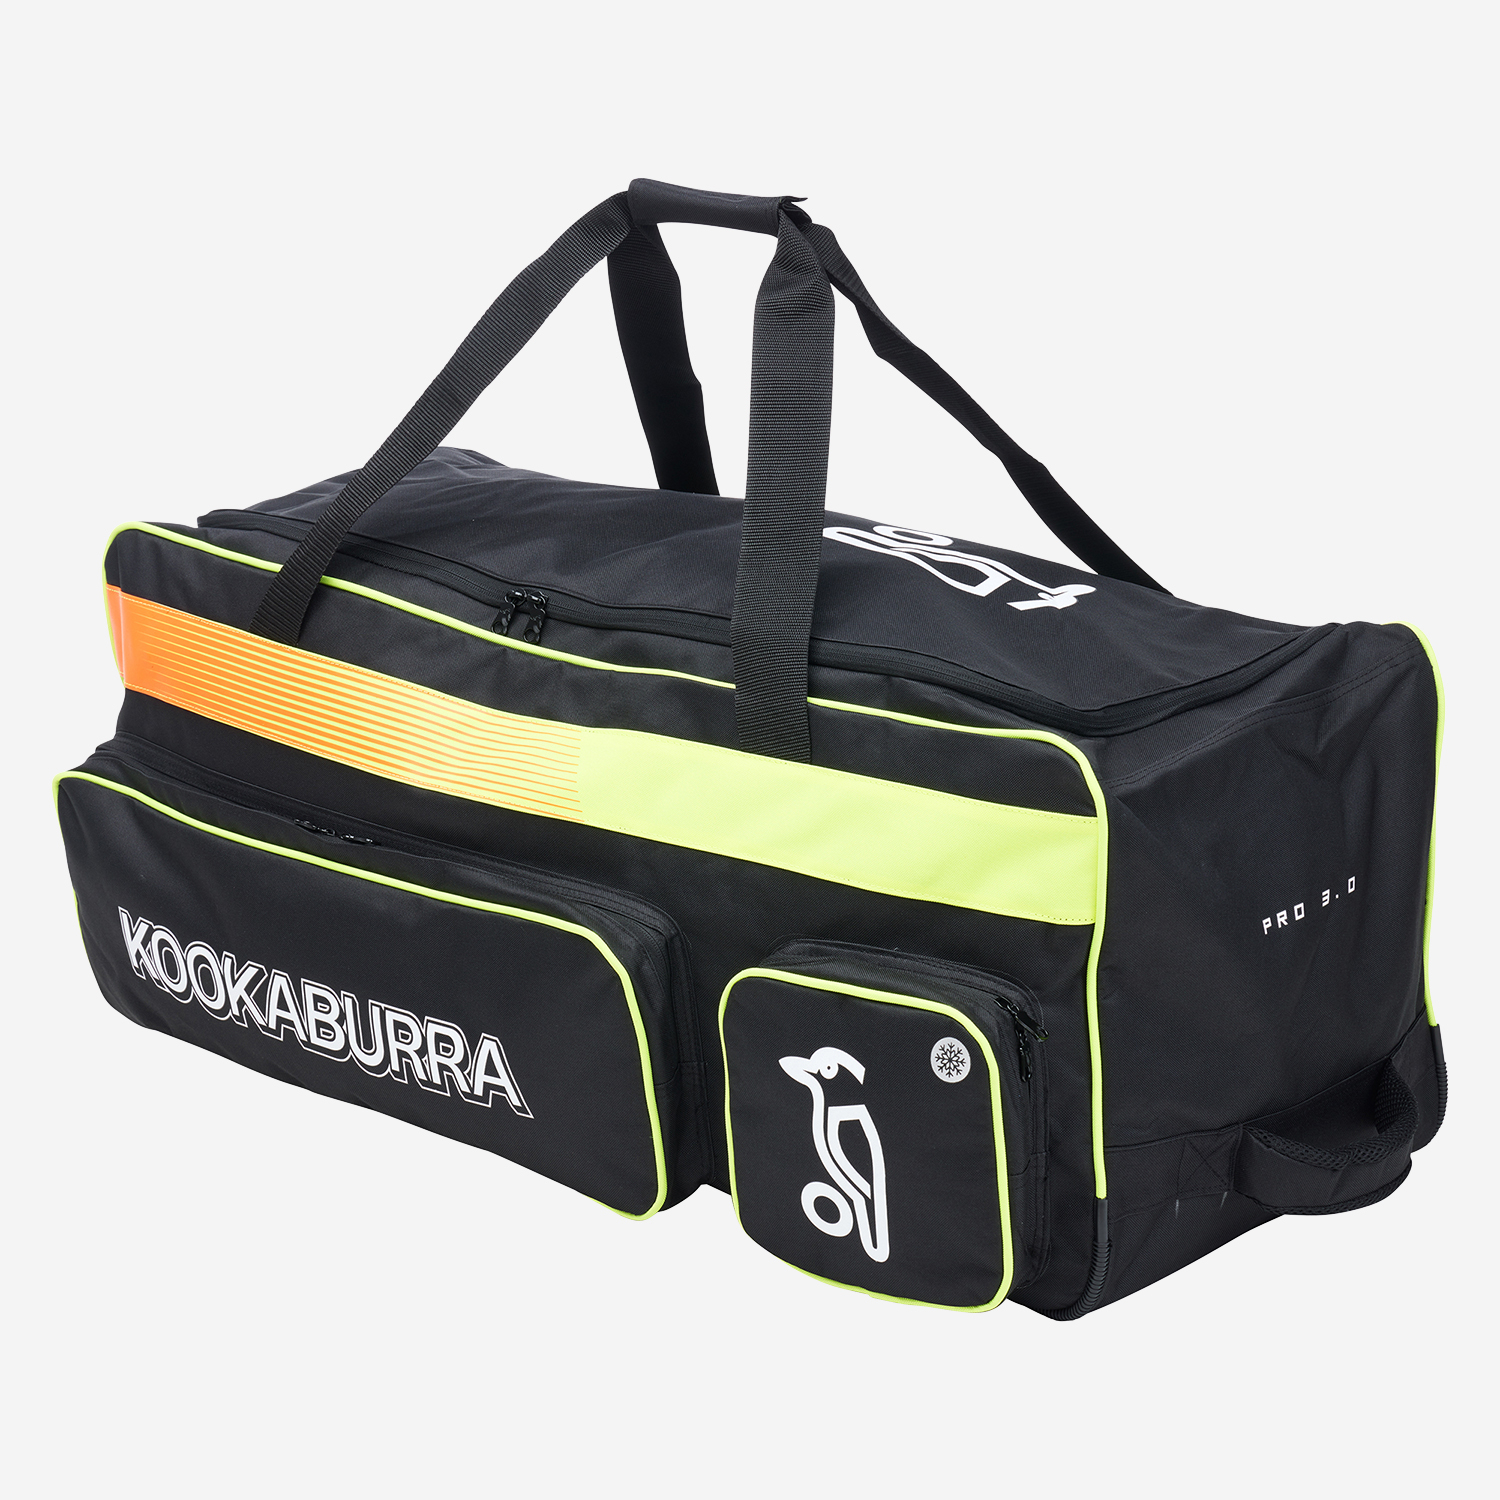 Pro 3.0 Wheelie Bag